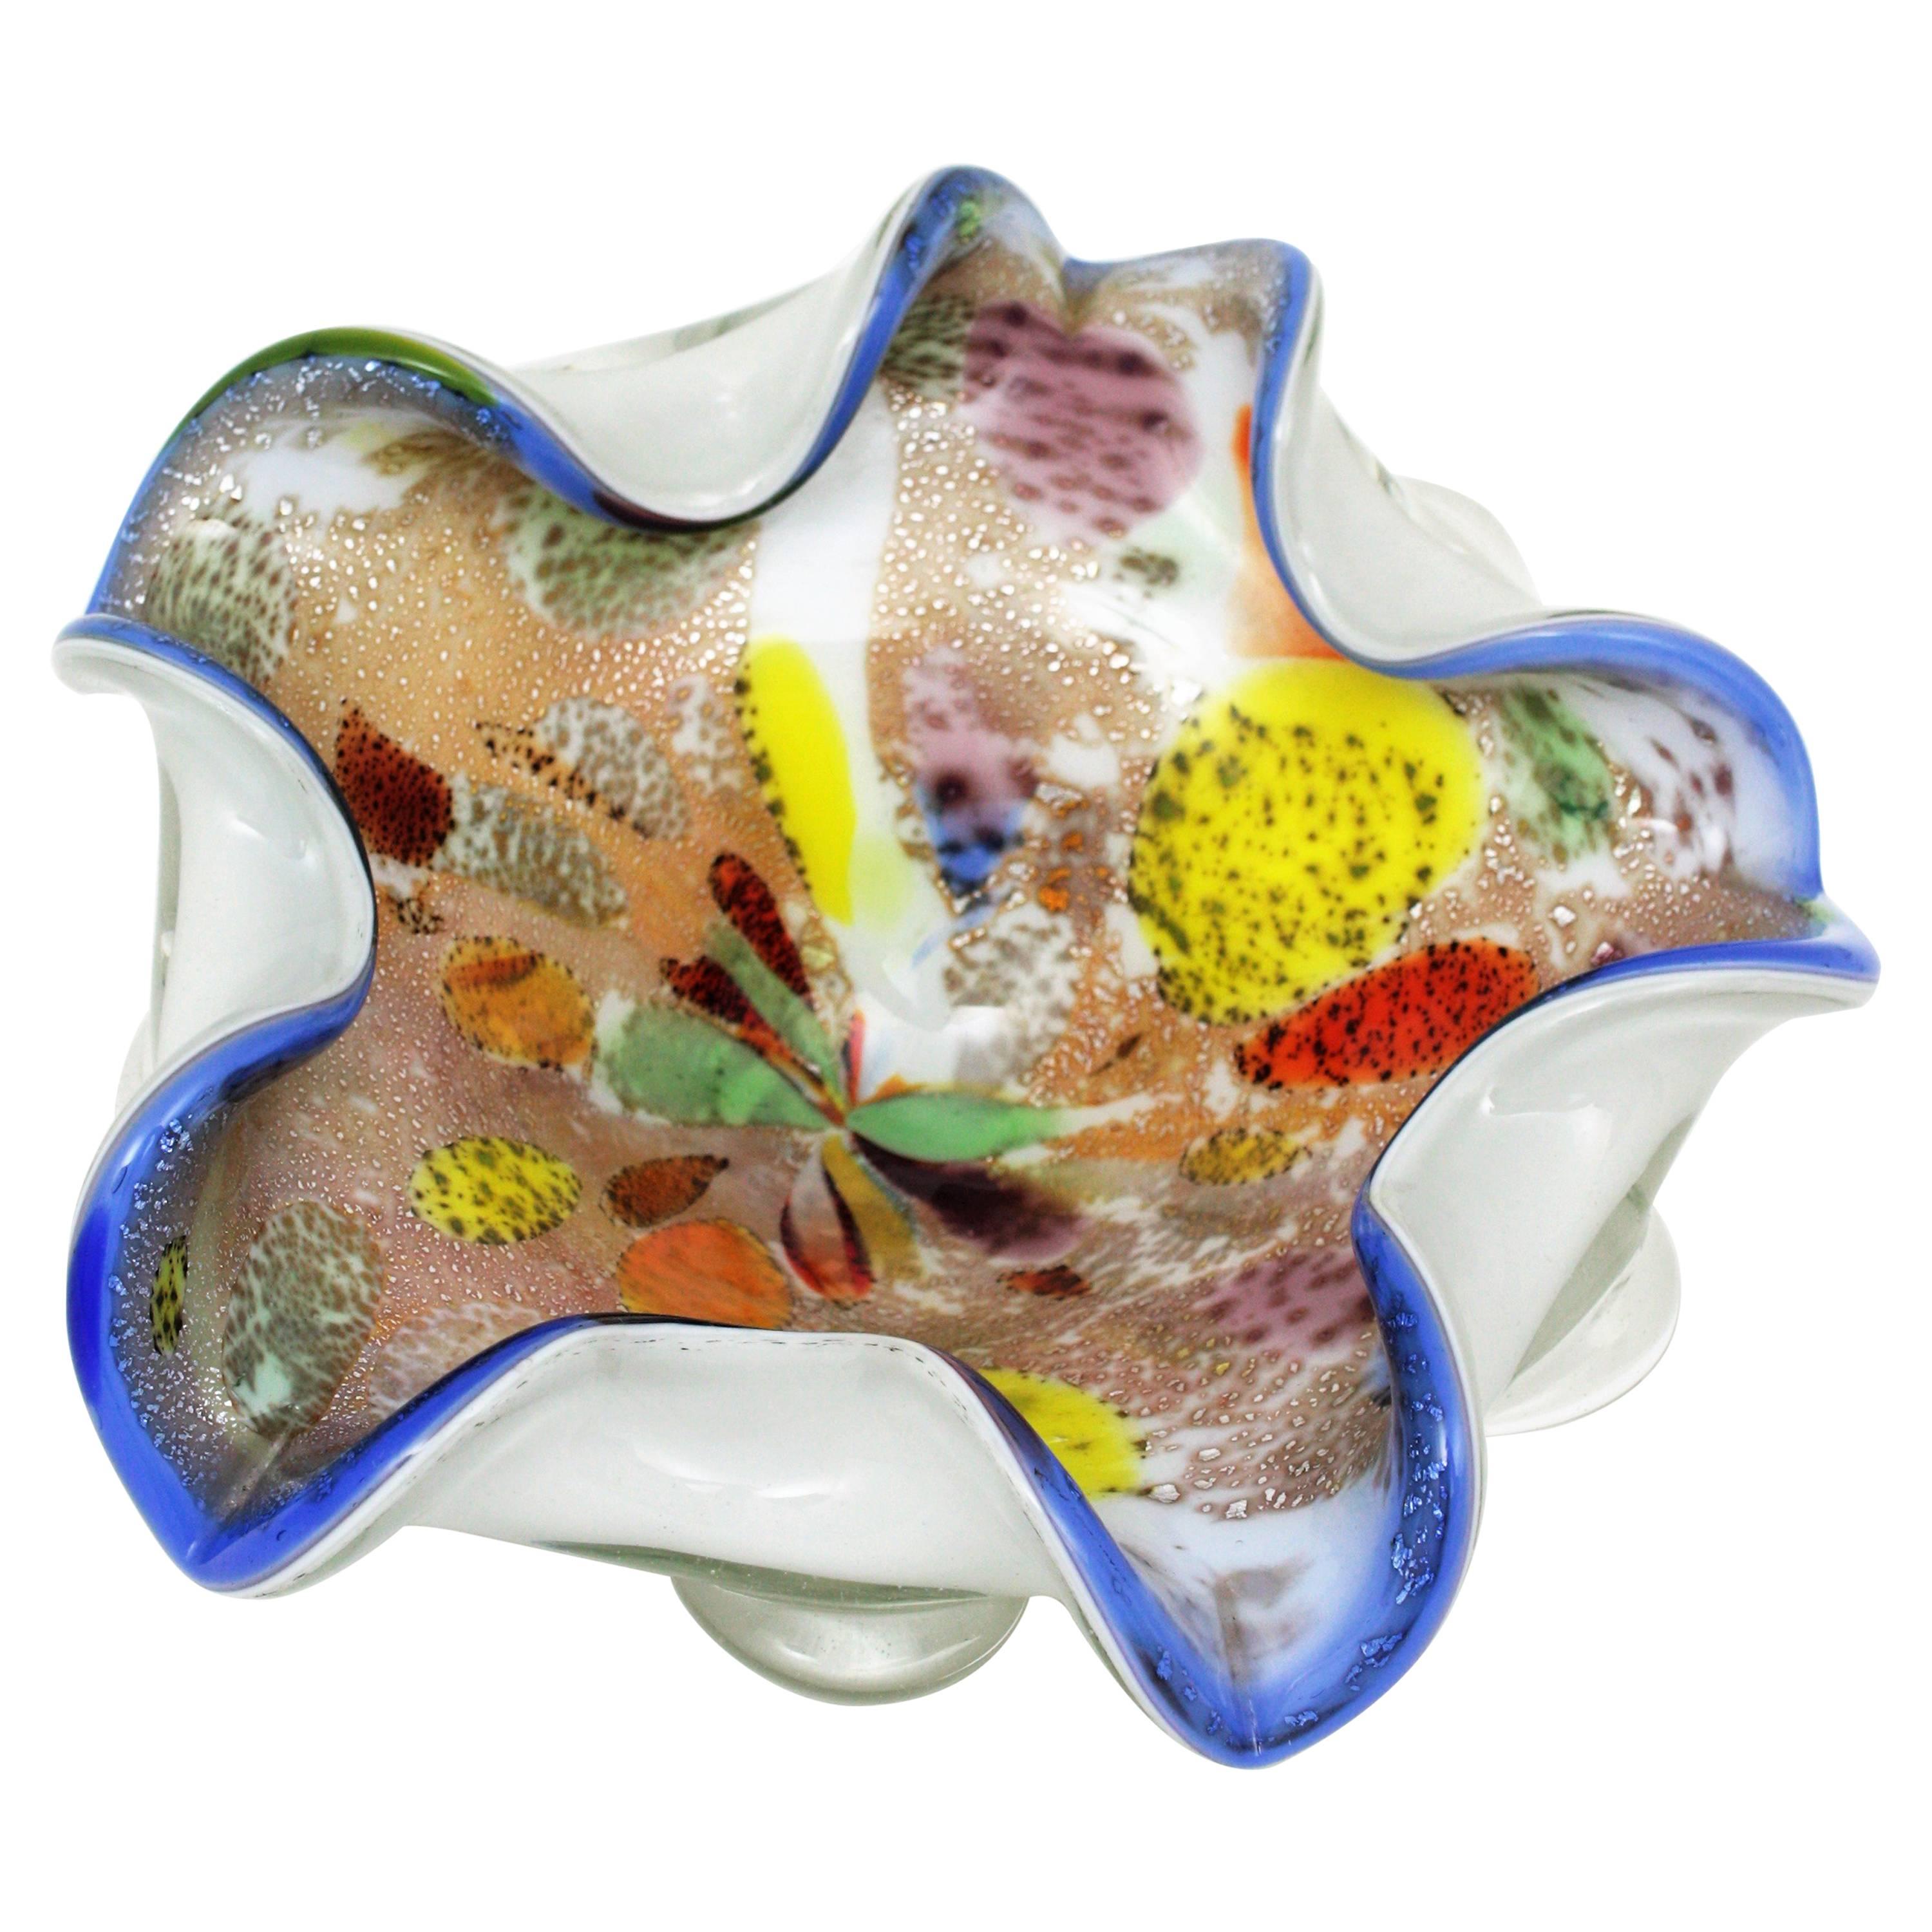 A colorful and highly decorative Tutti Frutti Murano art glass flower bowl. Attributed to Dino Martens and Arte Vetreria Muranese. Italy, 1950s-1960s
Zanfirico and latticino techniques in different colors and silver aventurine flecks